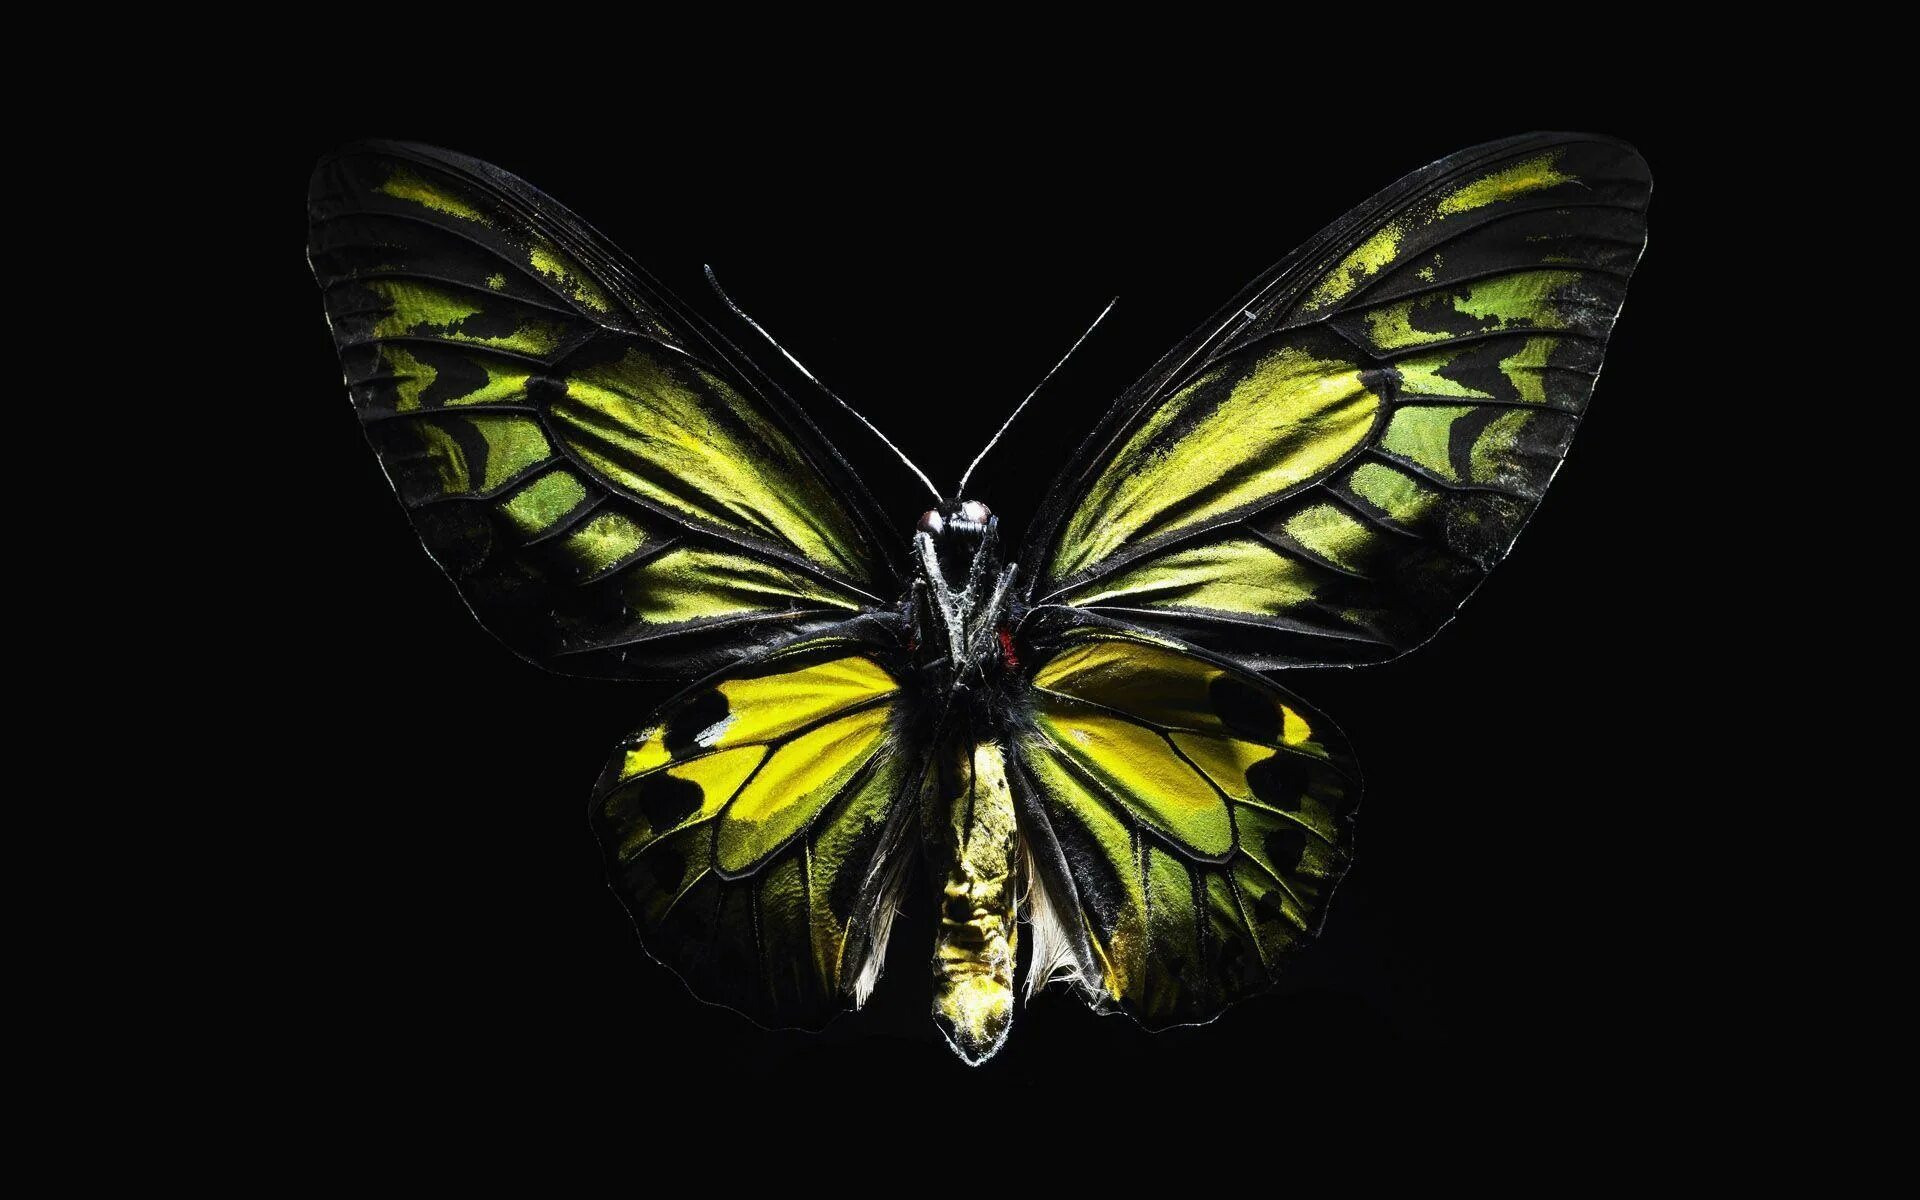 Бабочка черный глянец. Черно золотые бабочки. Черно зеленая бабочка. Черно зеленый фон с бабочками. Желтая бабочка на черном фоне.